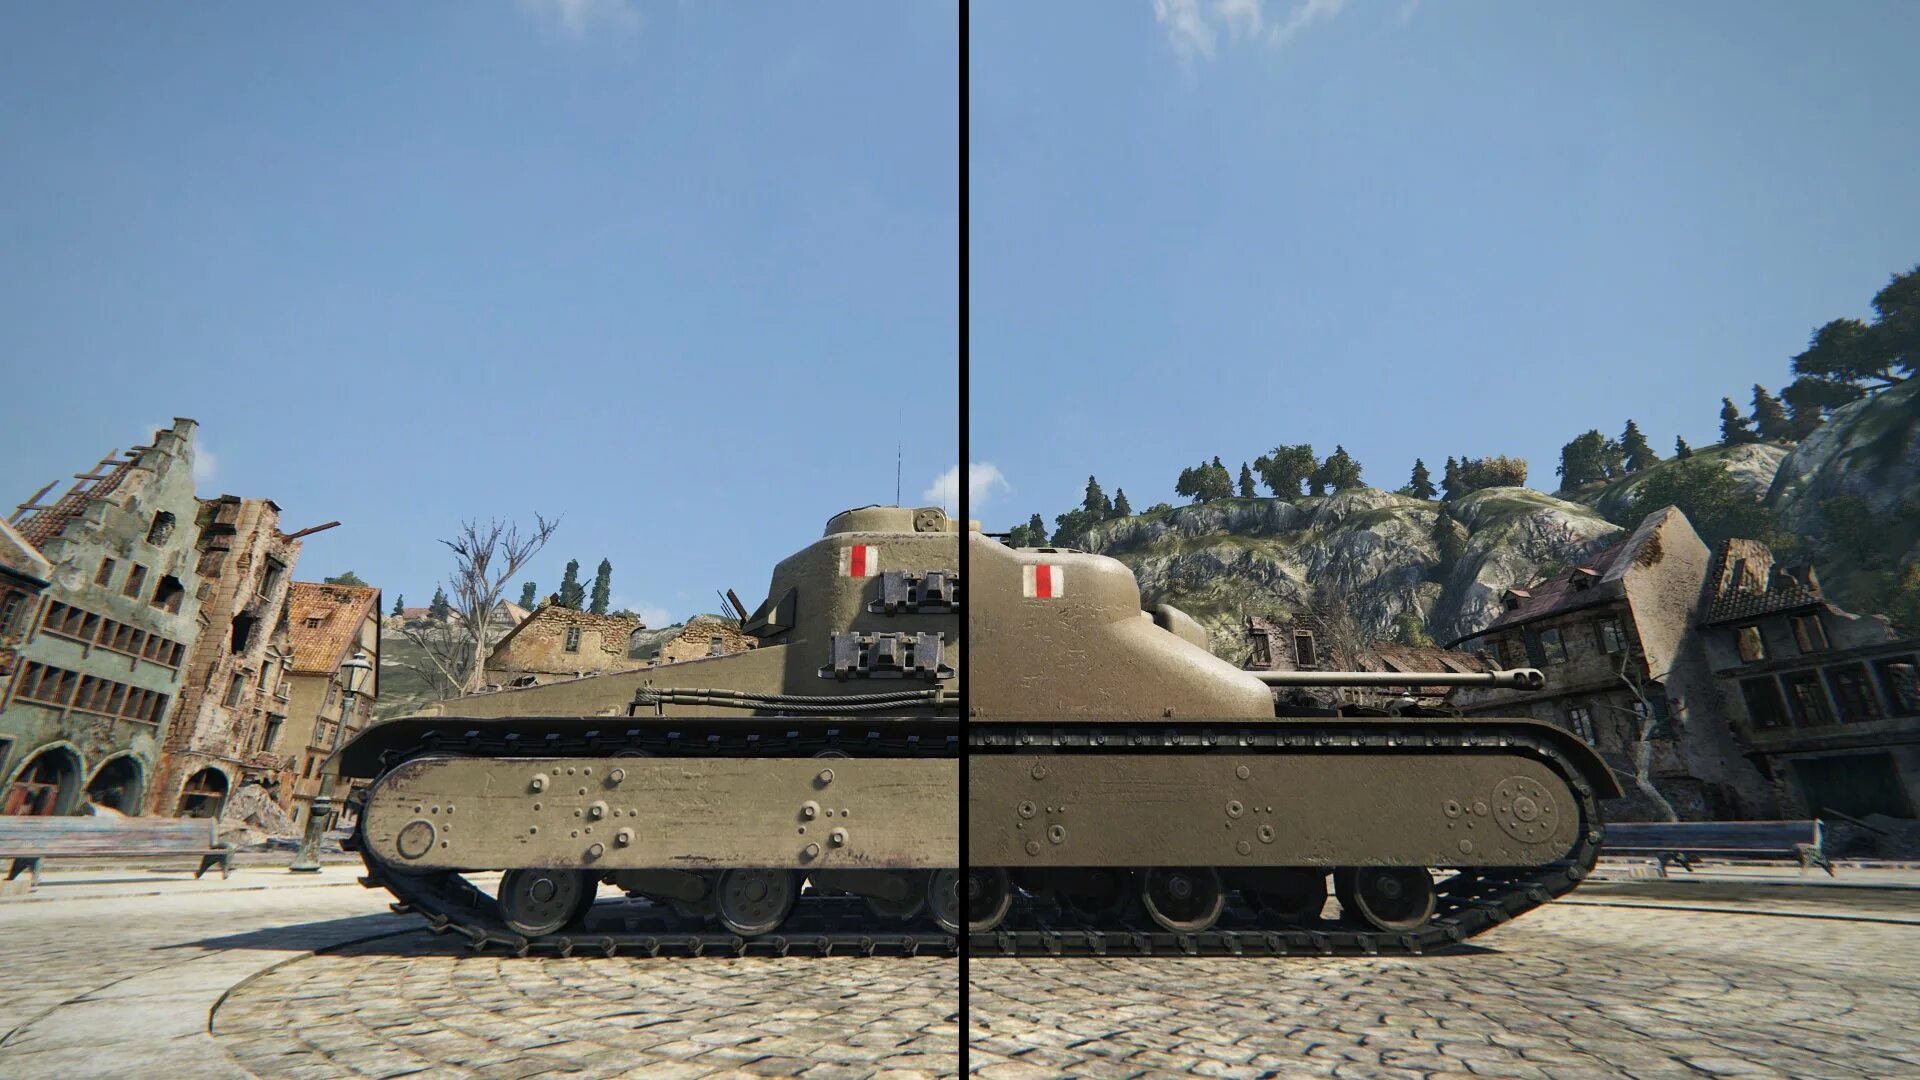 SD Графика в World of Tanks. Вот блиц сравнение